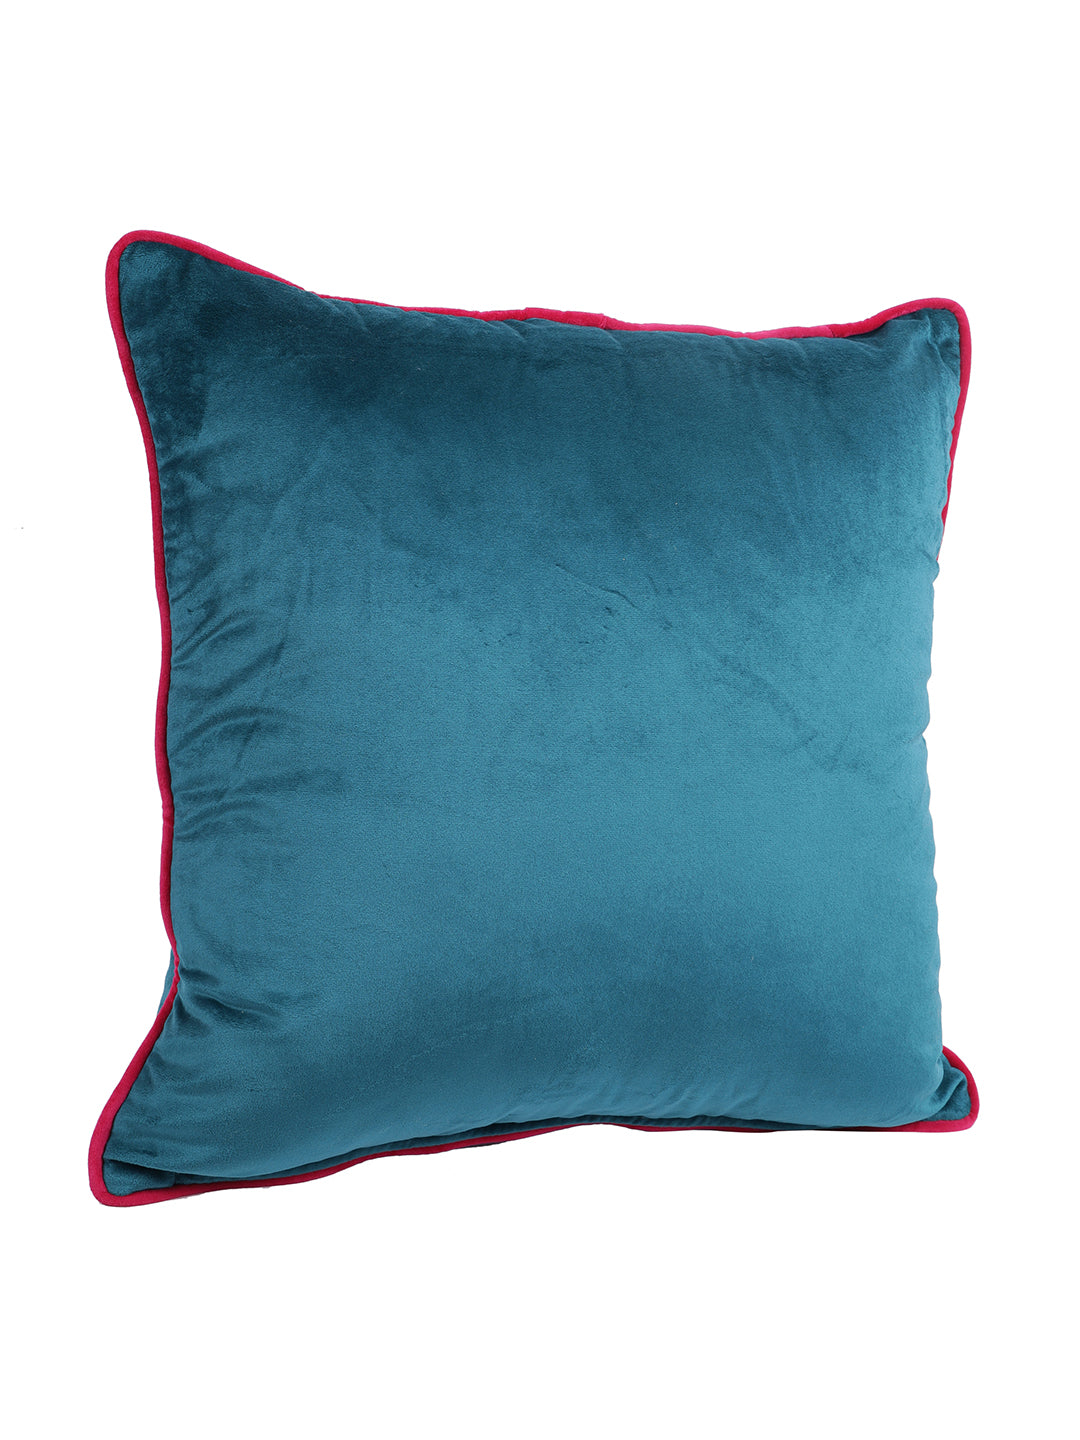 Teal Blue Set of 2 Velvet Square Cushion Covers